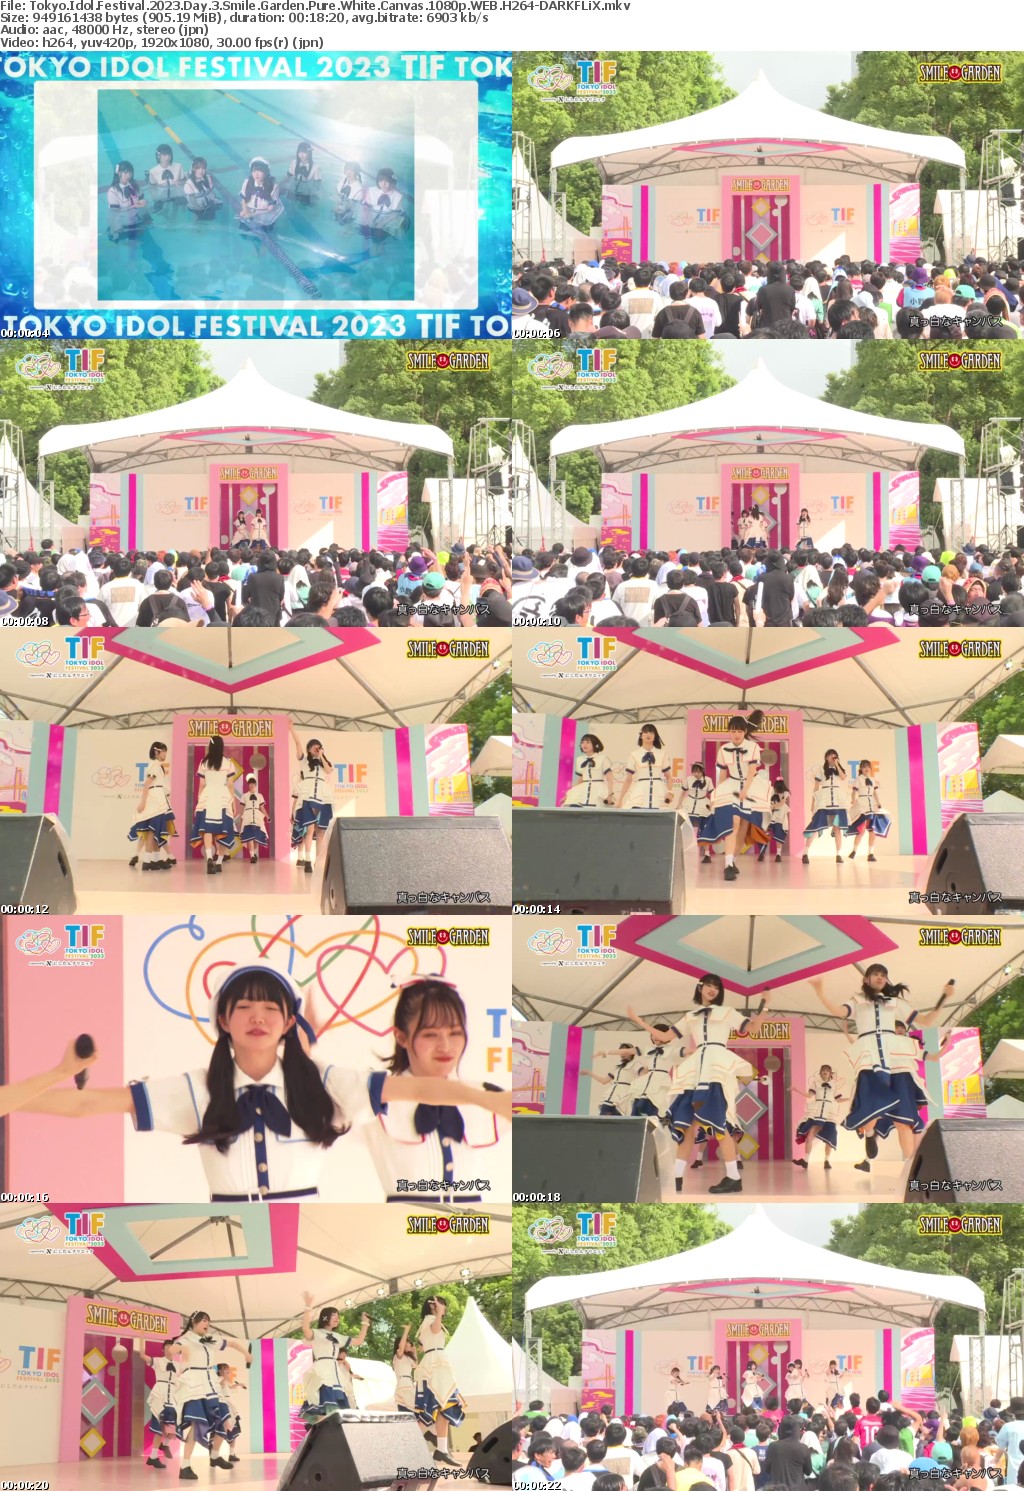 Tokyo Idol Festival 2023 Day 3 Smile Garden Pure White Canvas 1080p WEB H264-DARKFLiX